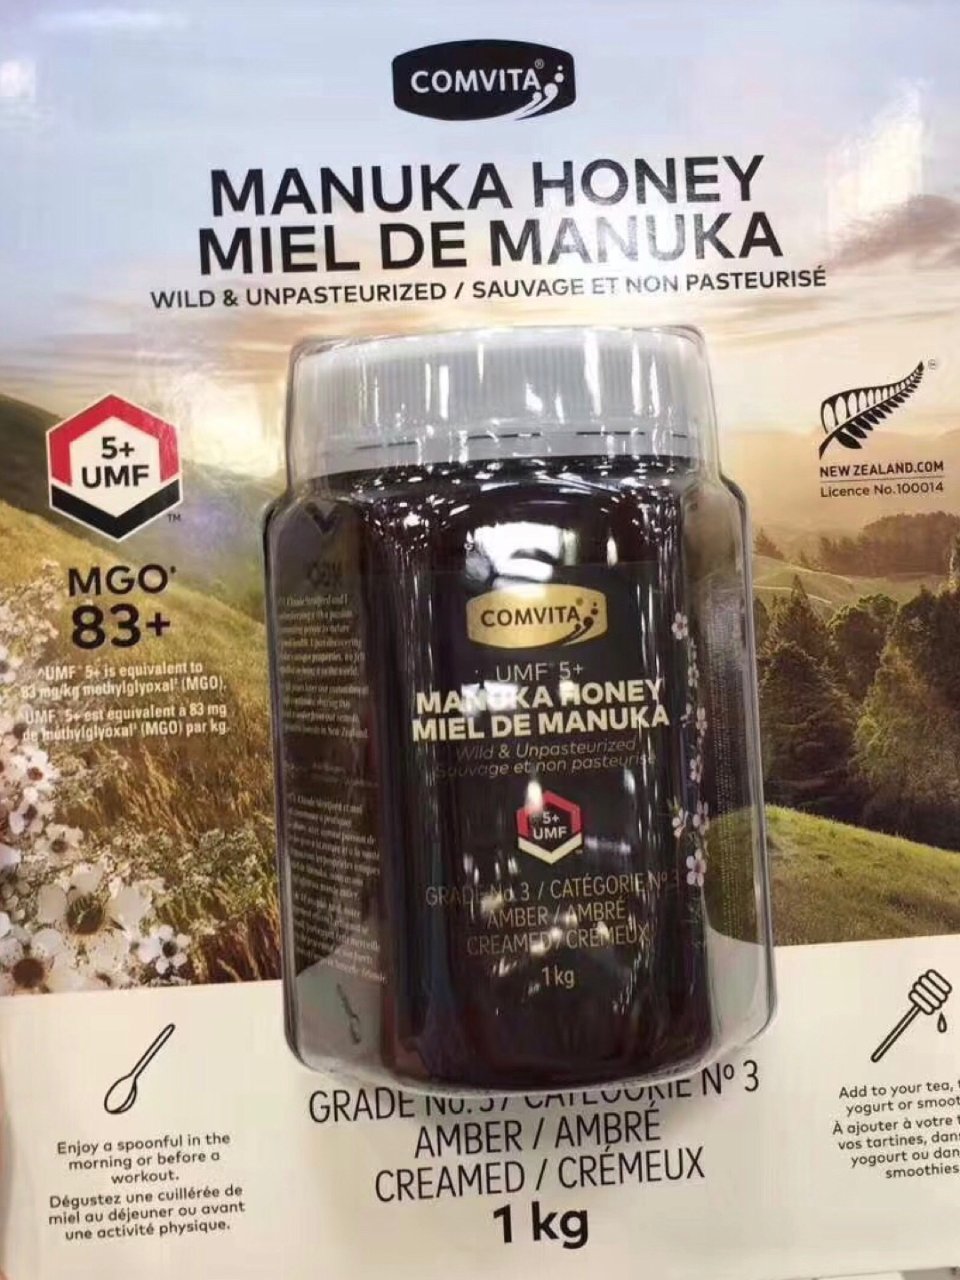 Manuka麦卢卡蜂蜜是养胃的良品...